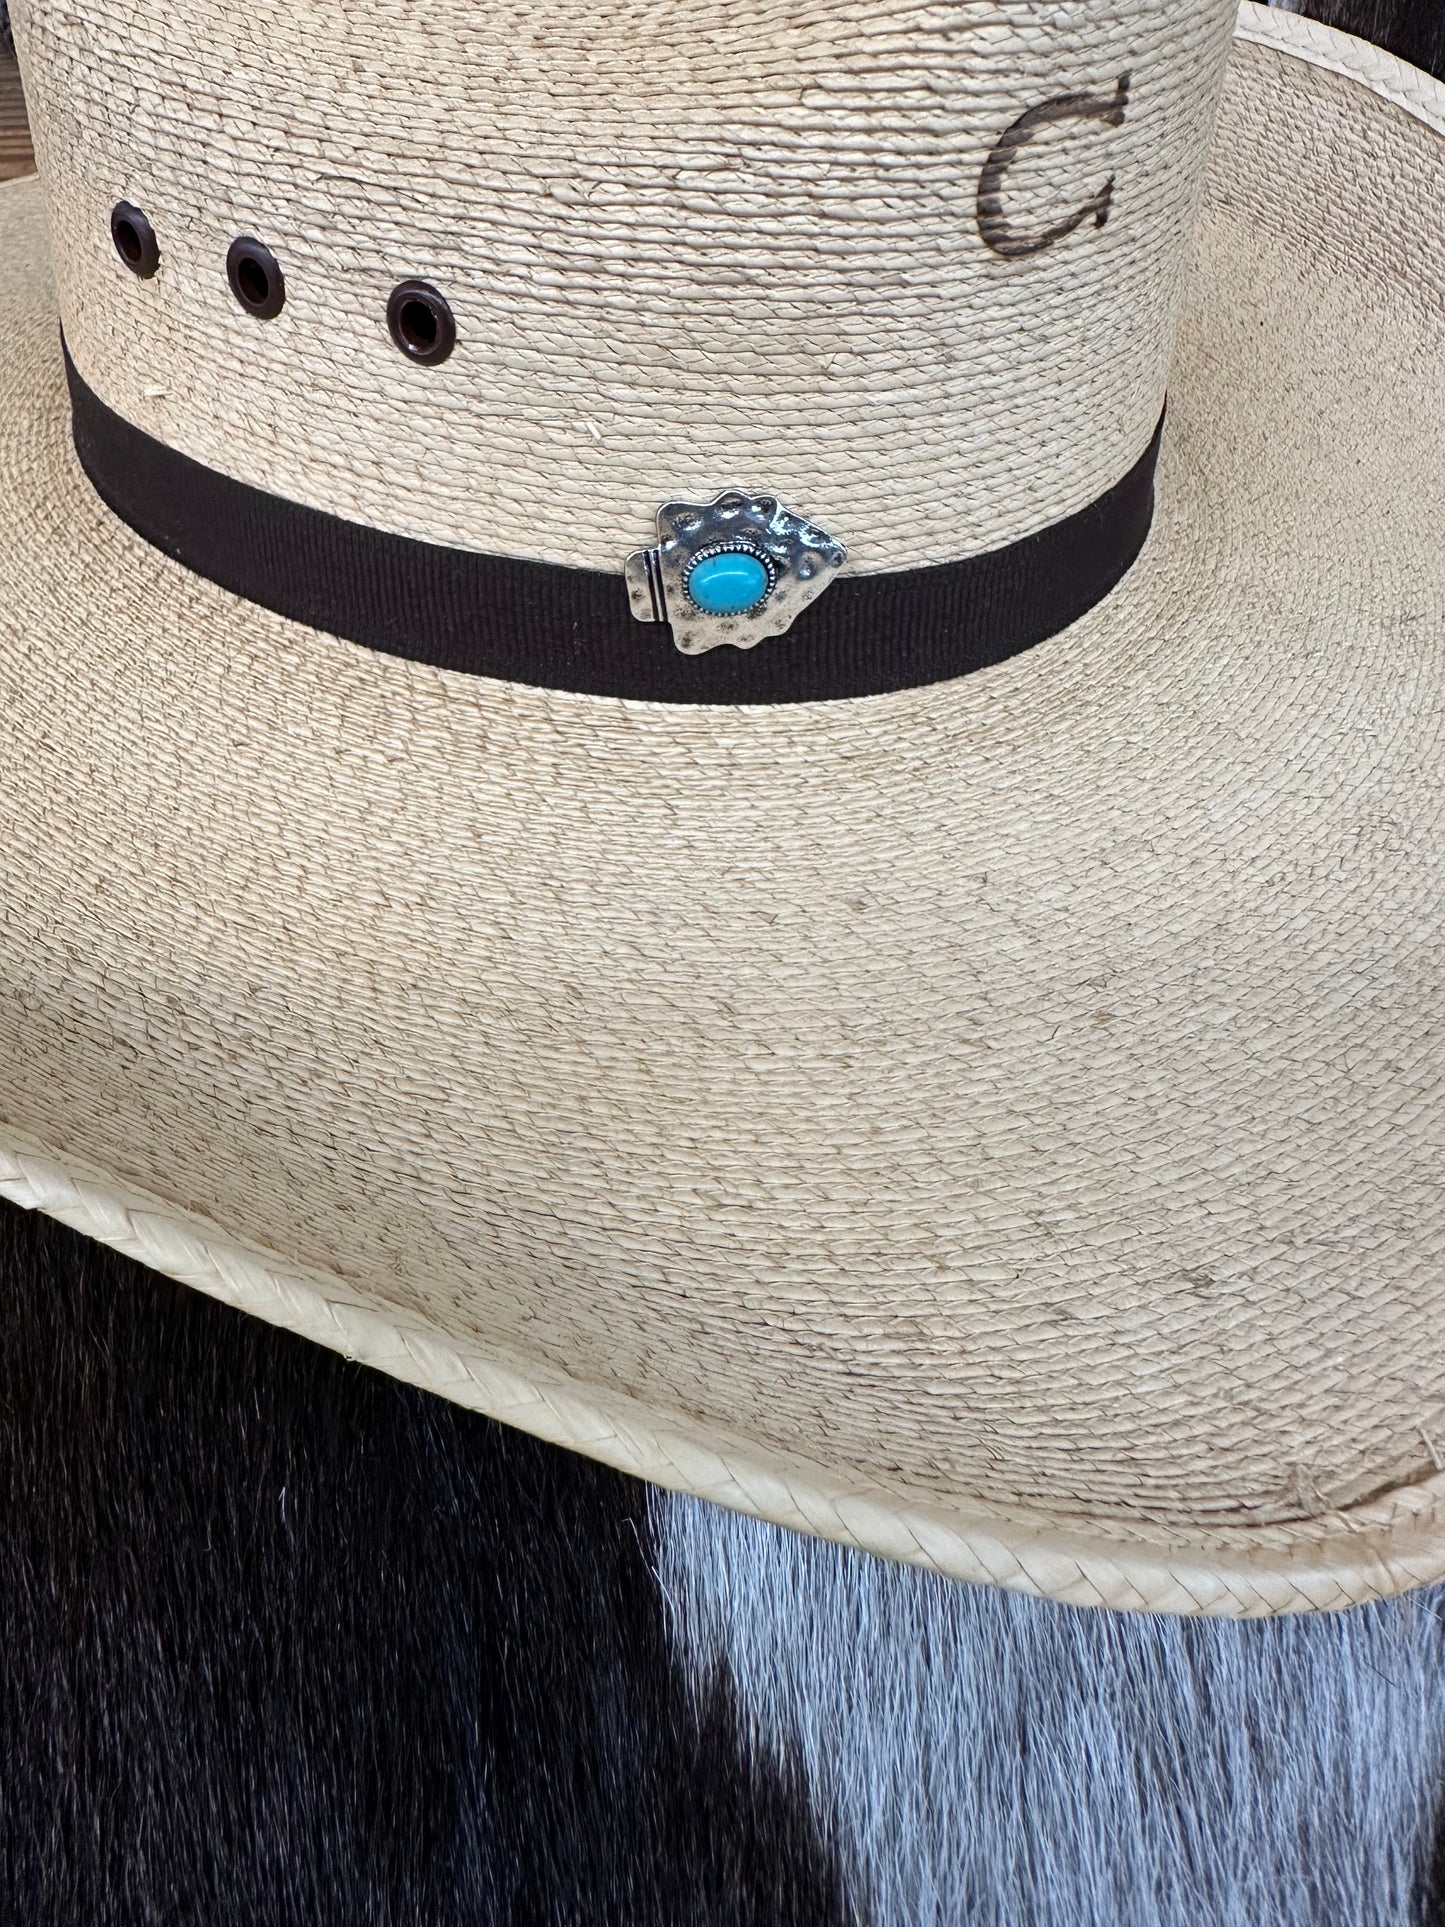 The Arrowhead Hat Pin